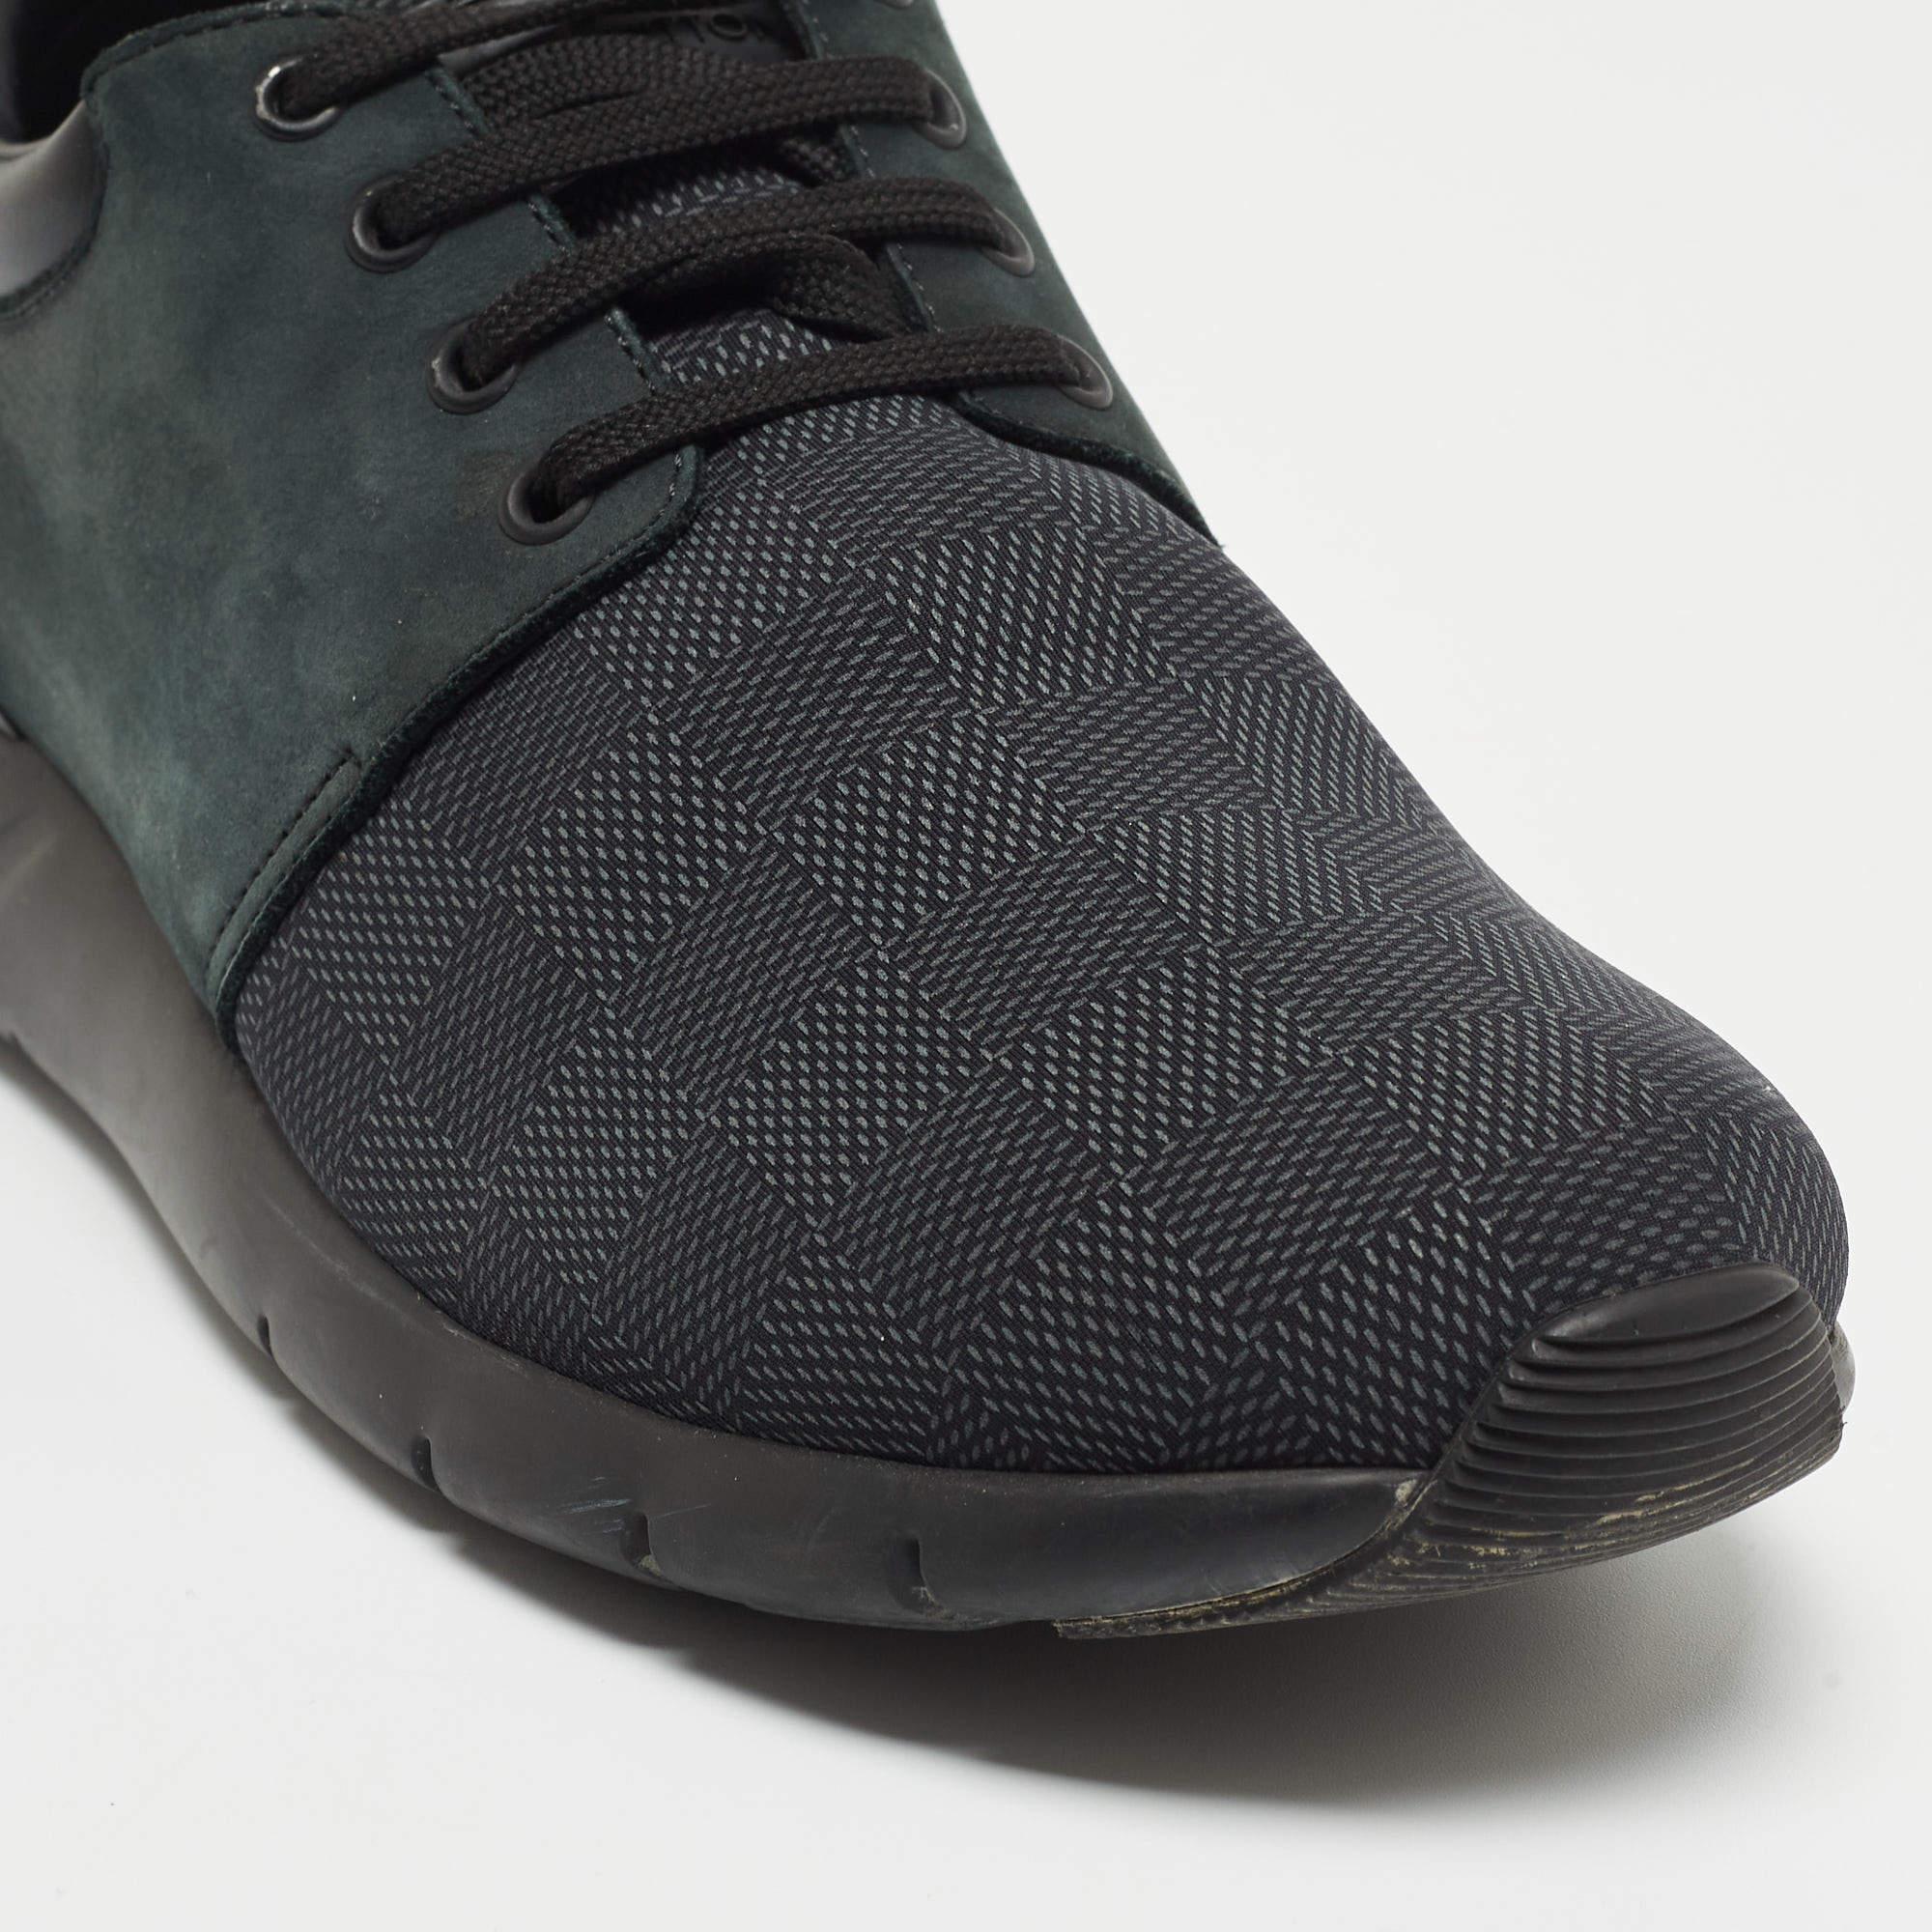 Louis Vuitton Black/Green Leather and Nylon Fastlane Sneakers Size 41 1